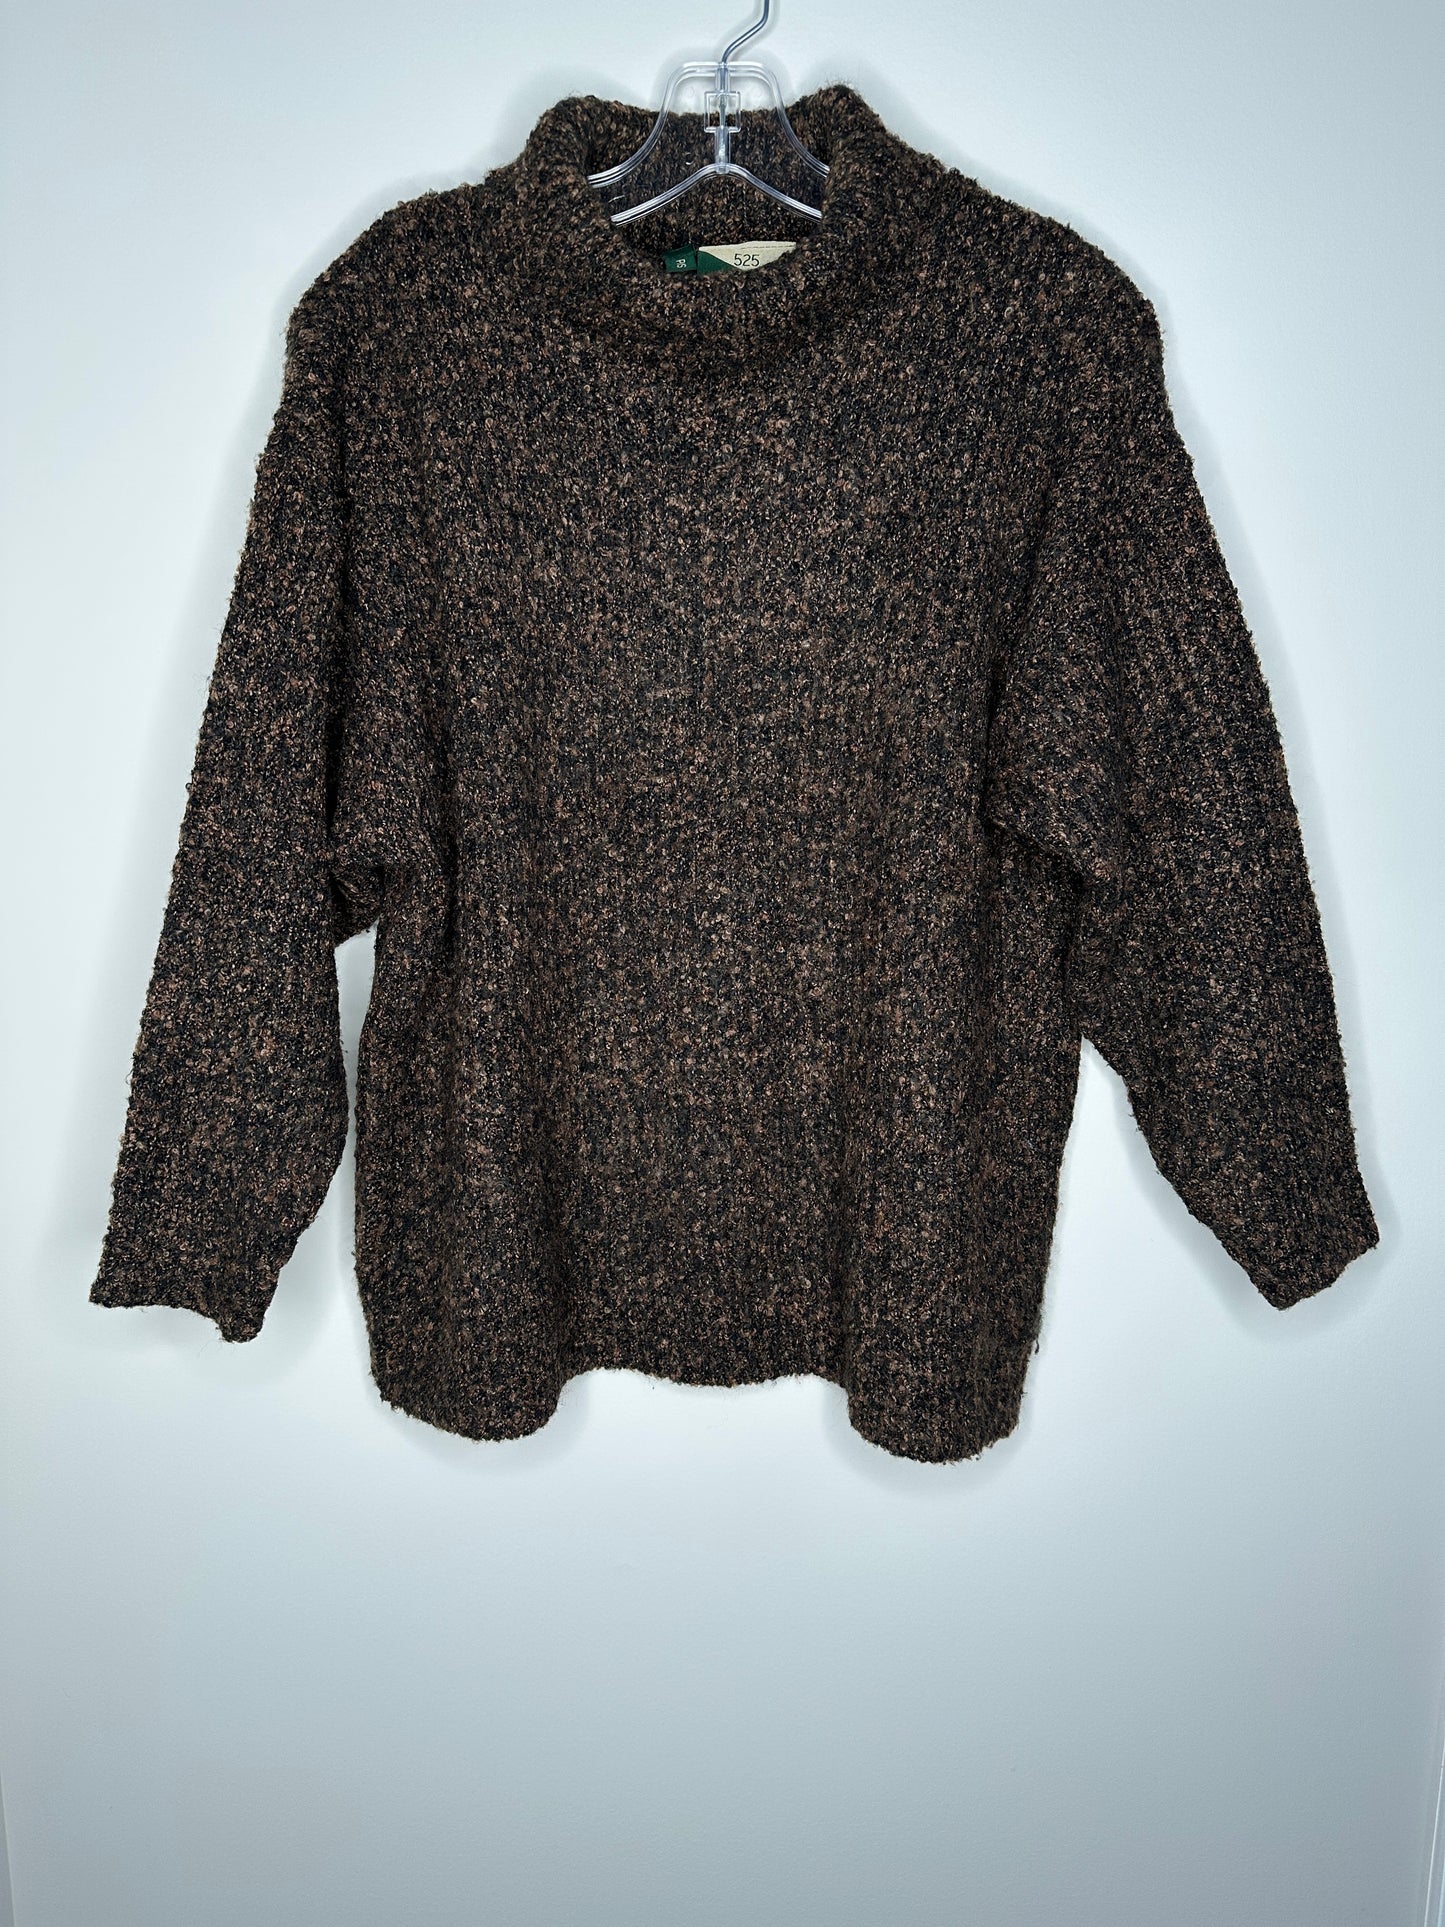 525 Bergdorf Goodman Size P/S Black & Brown Turtleneck Sweater (runs large - please see meas.)